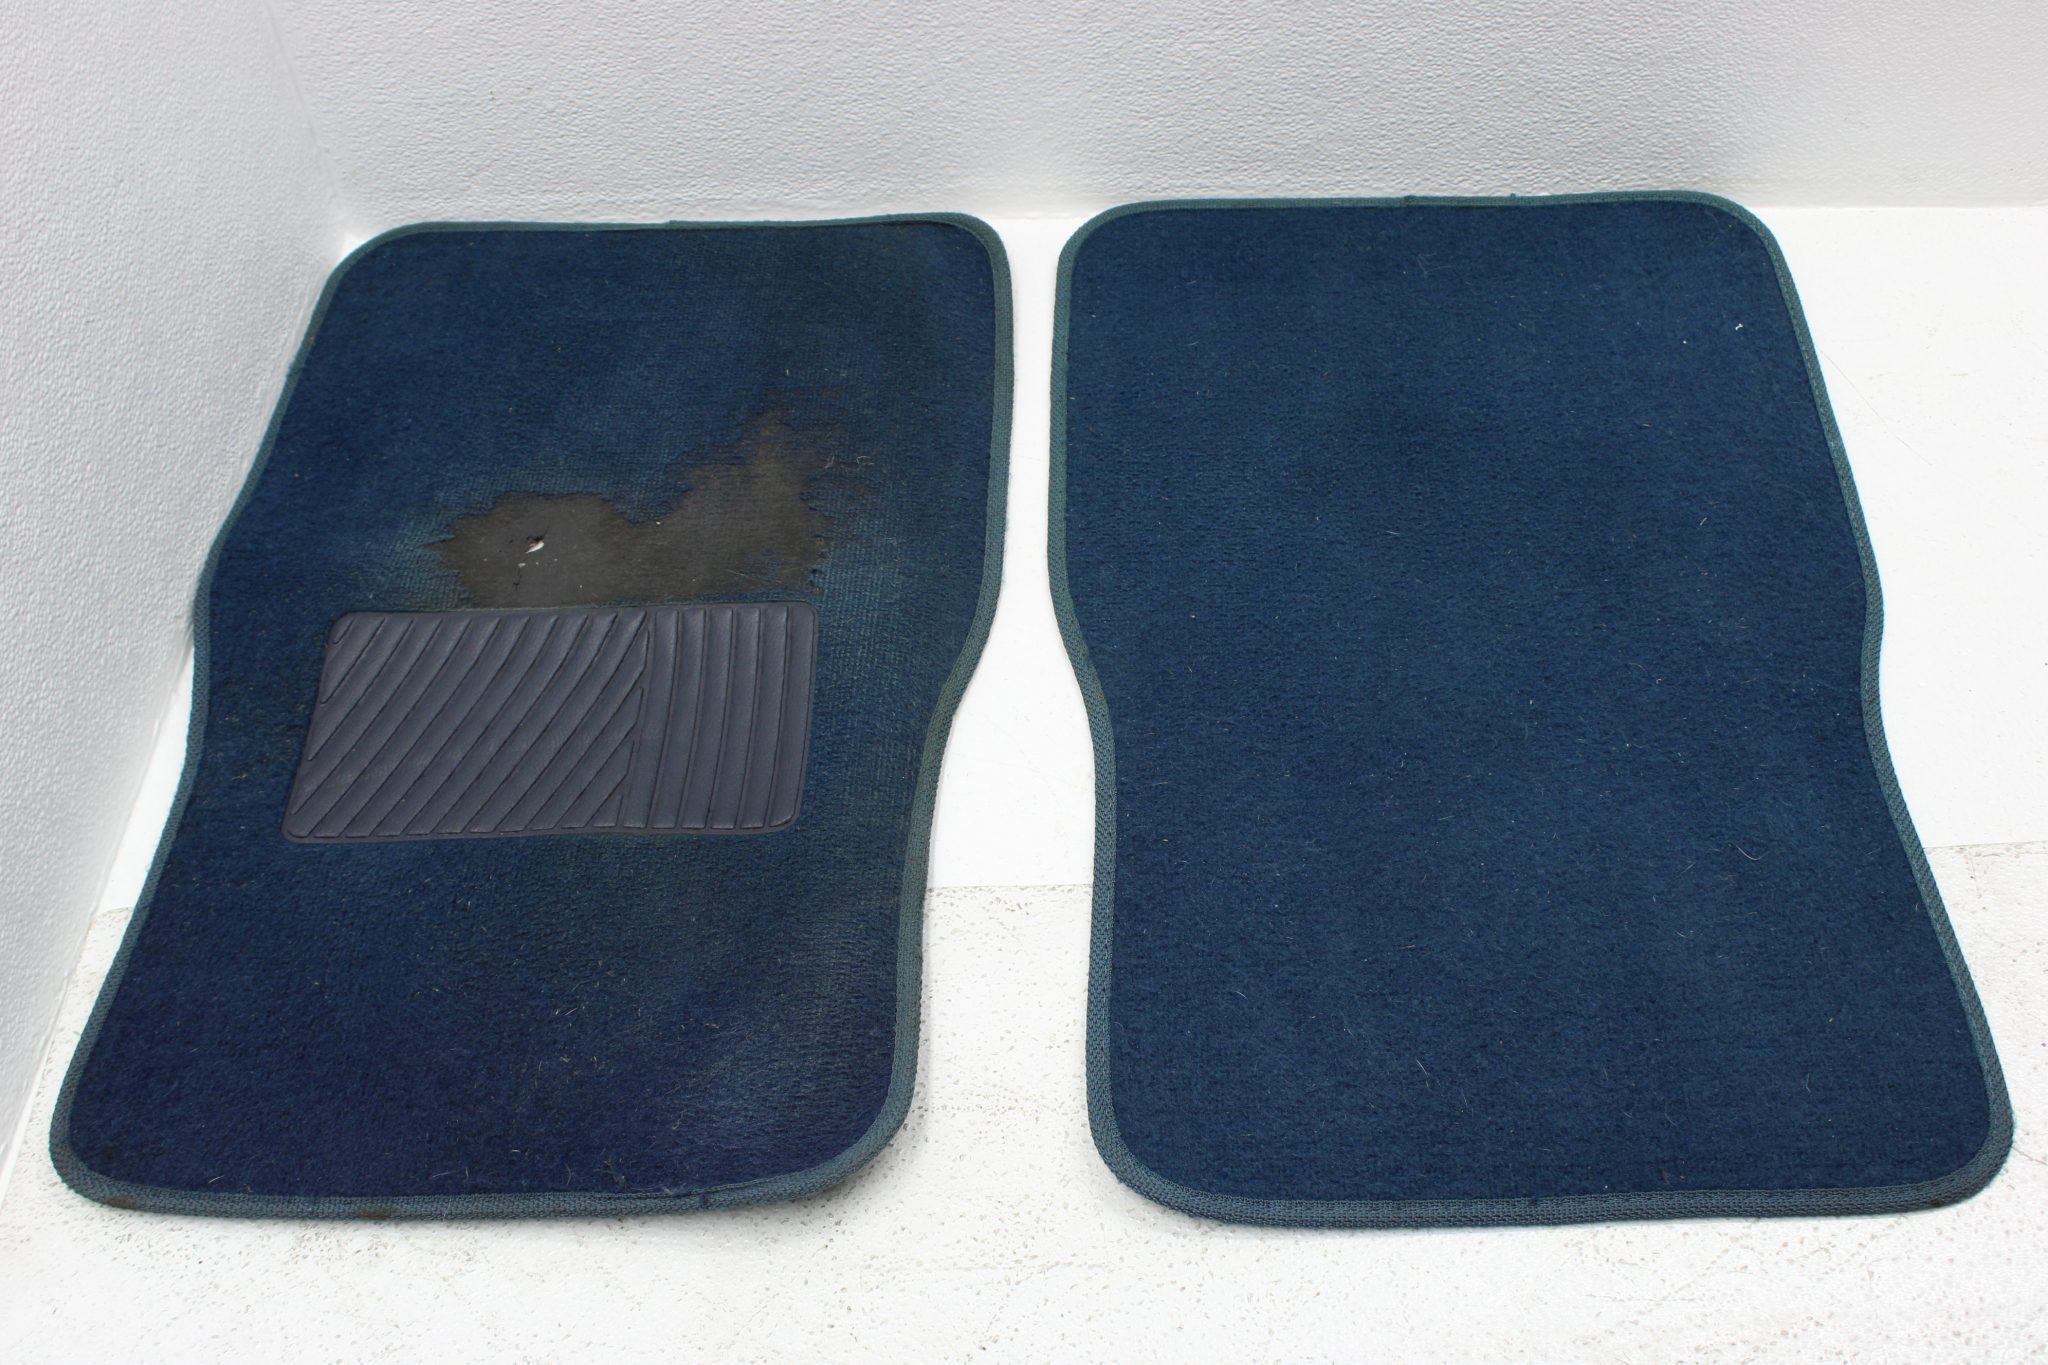 20042007 SUBARU IMPREZA WRX STI BLUE INTERIOR FLOOR MAT CARPET SET FRONT AND REAR OEM